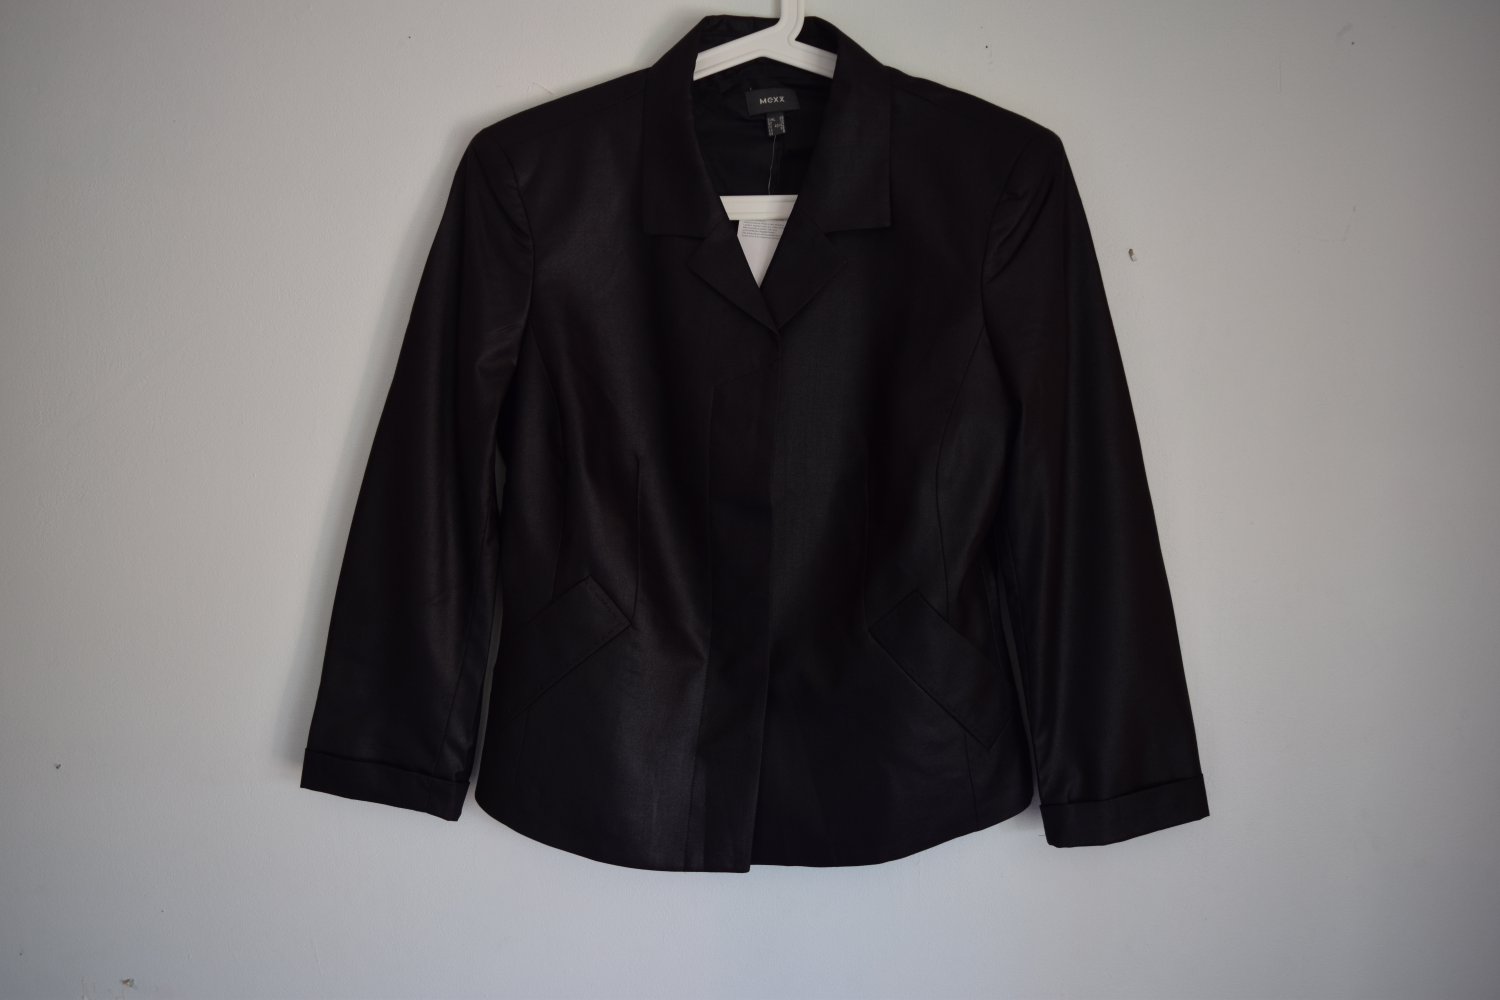 Mexx summer blazer jacket for women size US 10 UK 12